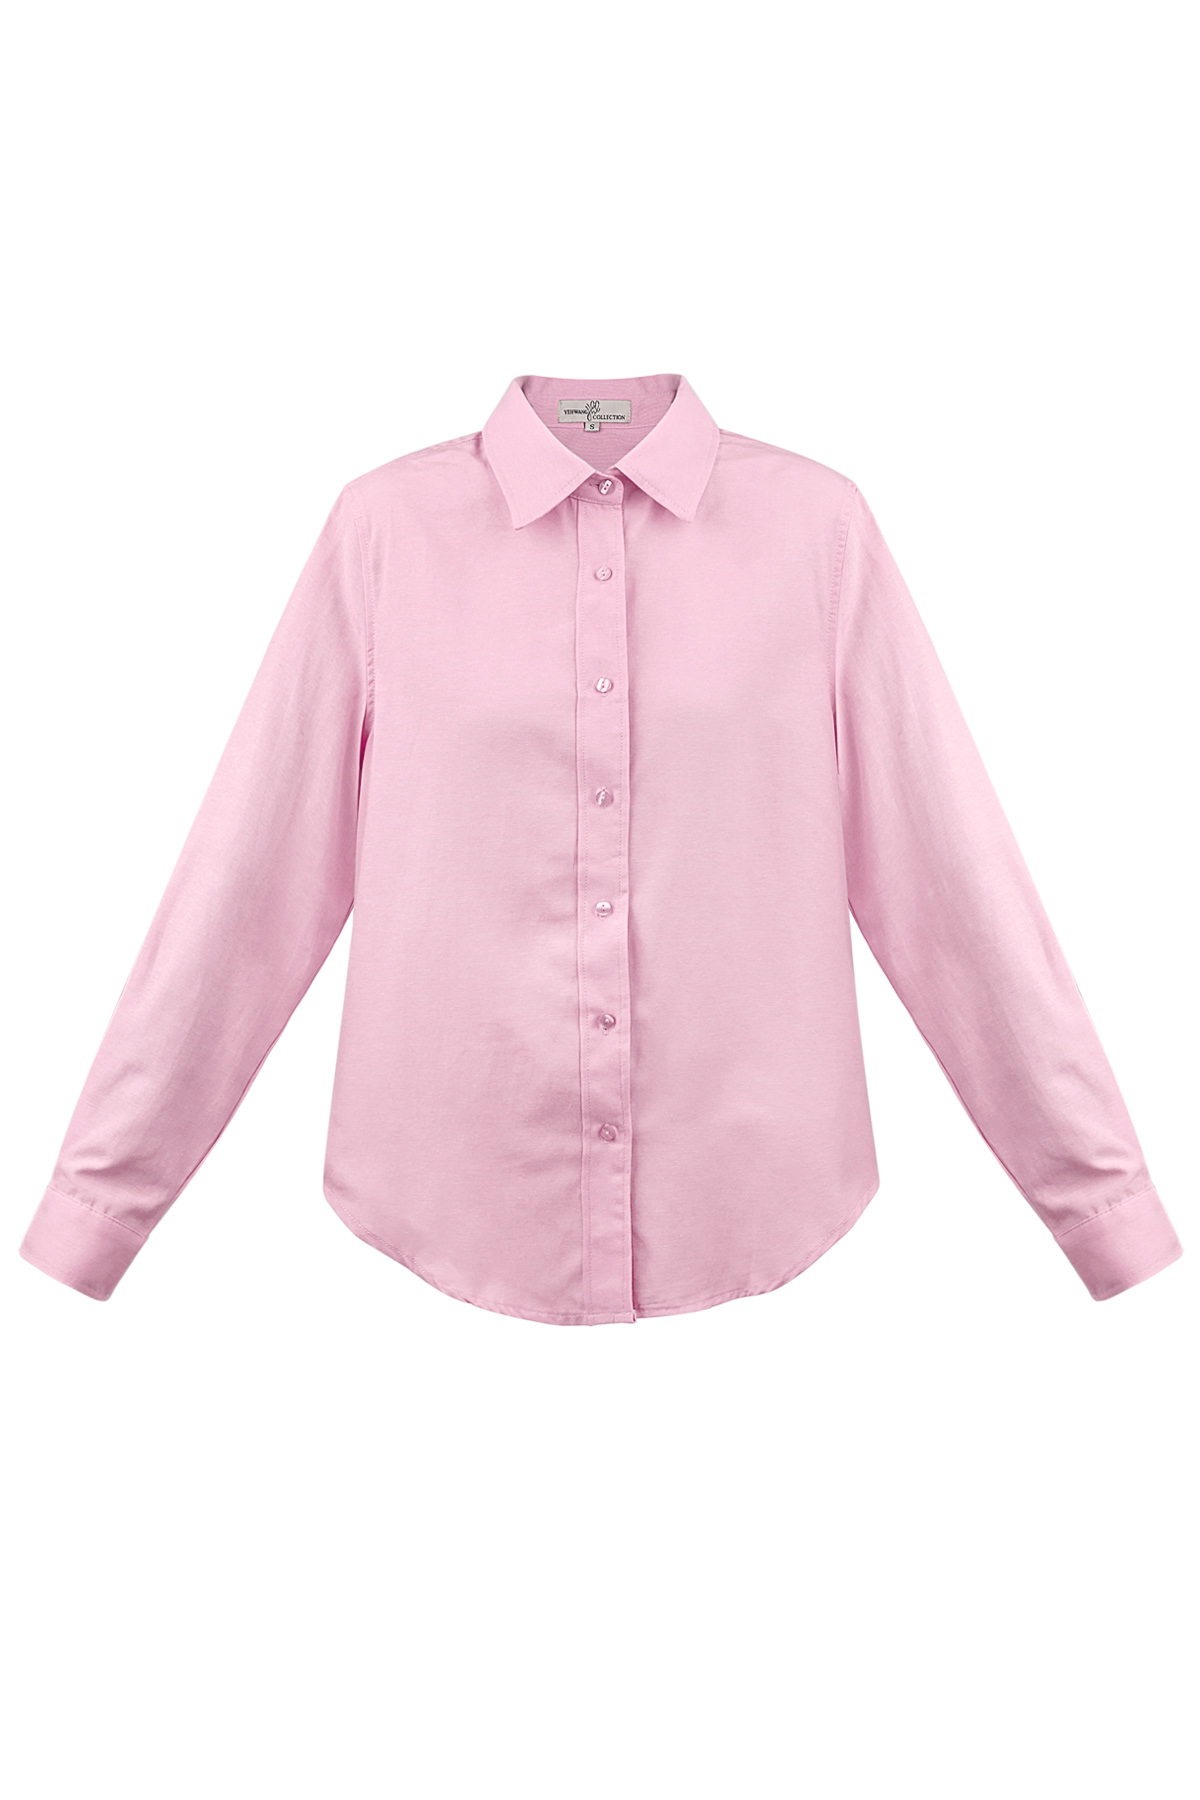 Basic plain blouse - pink h5 